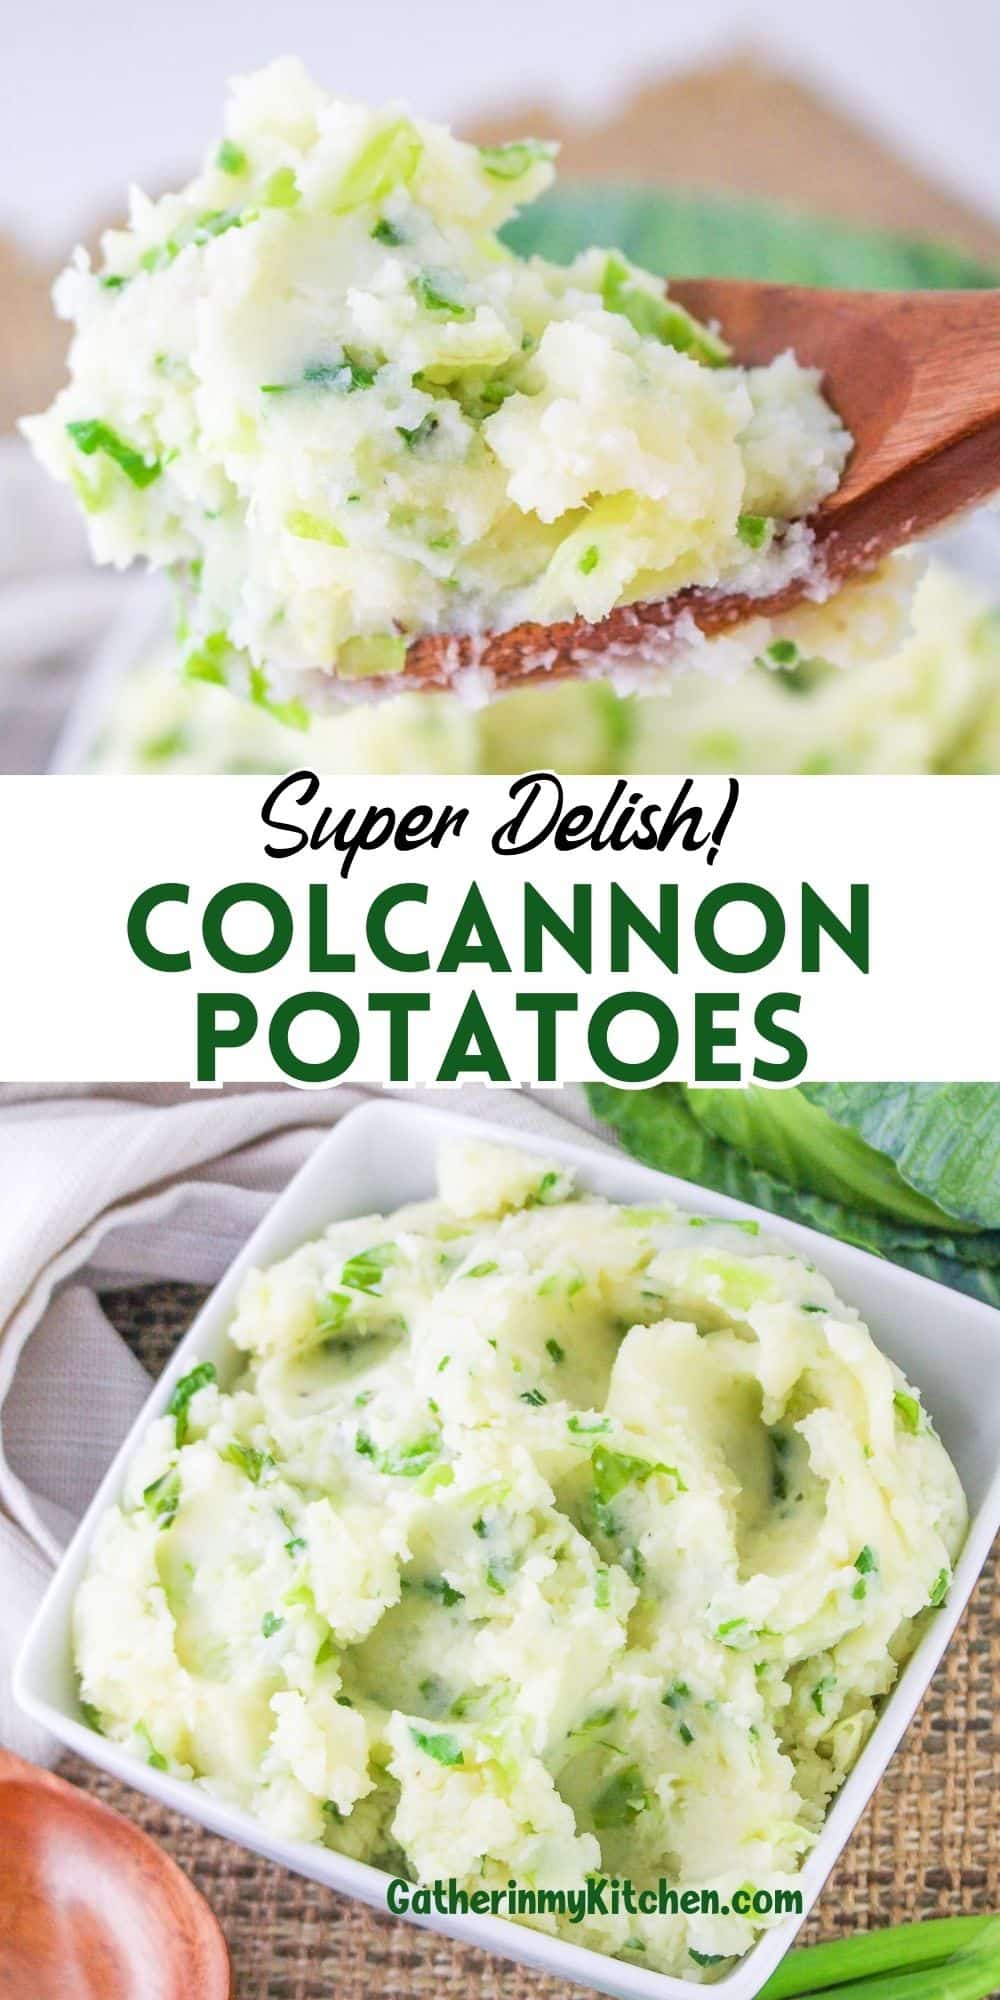 Pin image: top and bottom colcannon potato pics and middle says "Super Delish: colcannon potatoes".